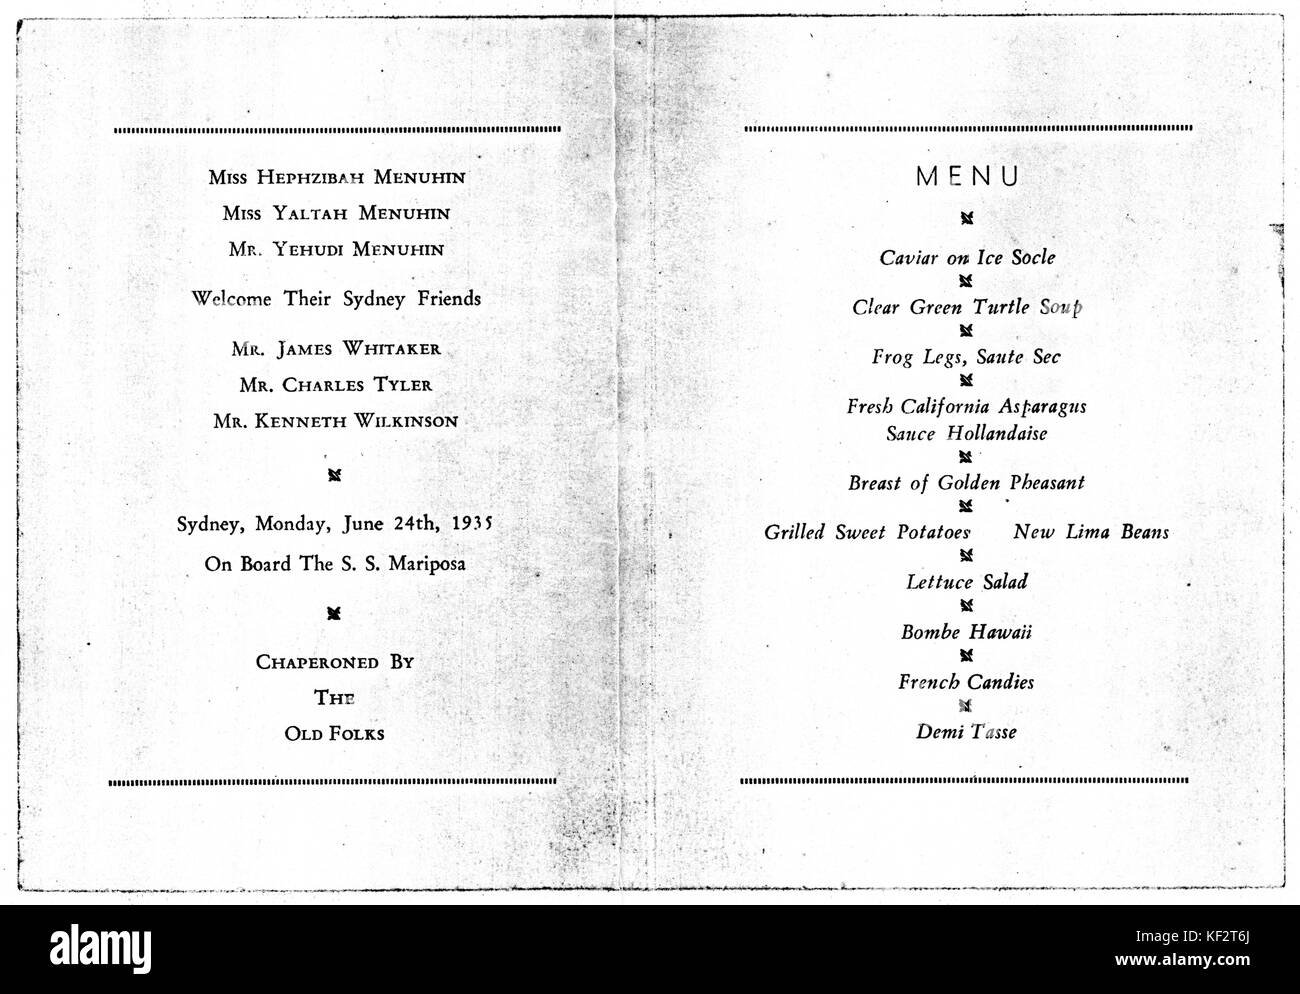 Menuhin family celebration menu. Celebration, 24th June, 1935, Sydney. On the S.S Mariposa. Held by Hephzibah, Yaltah and Yehudi Menuhin. Courtesy of Charles Tyler. Stock Photo